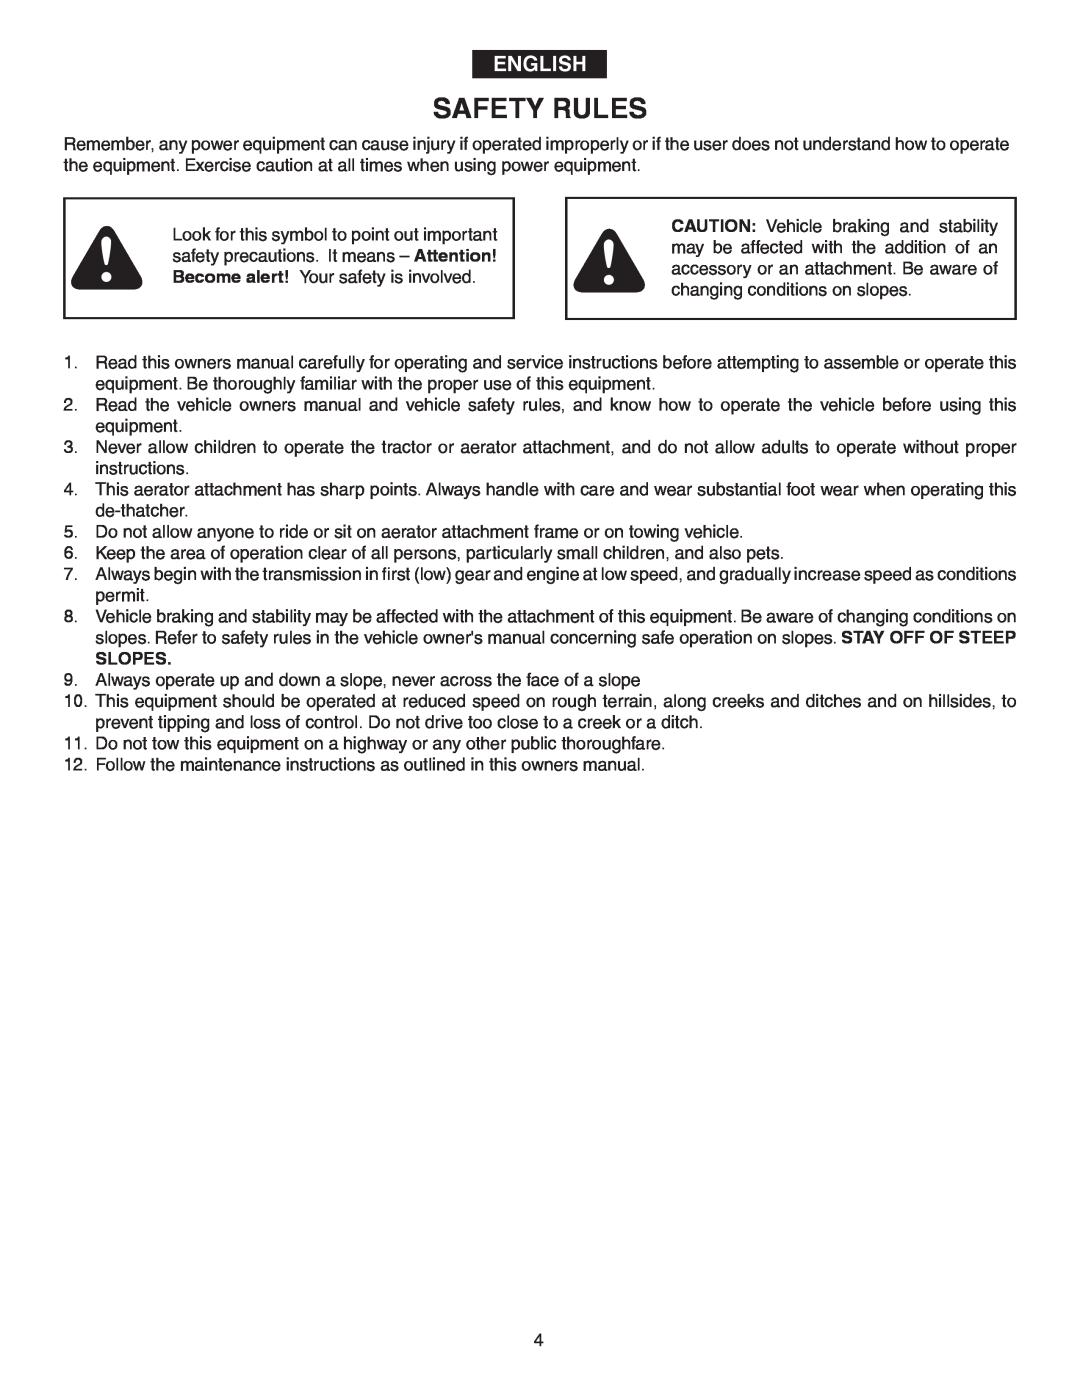 Agri-Fab 45-0346 owner manual Safety Rules, English, Slopes 